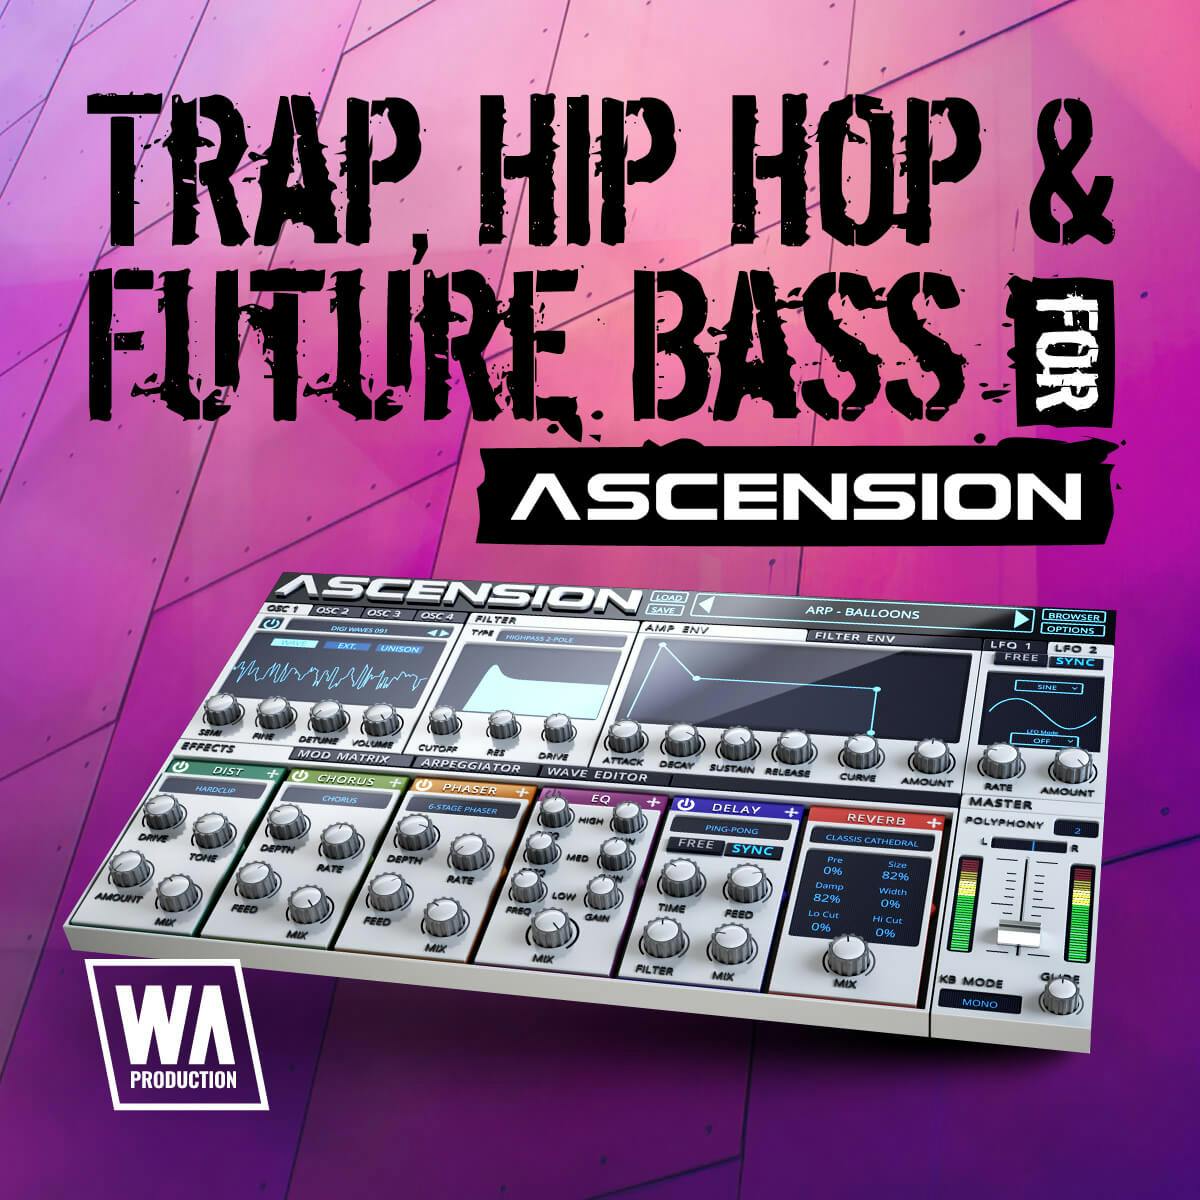 Trap, Hip Hop & Future Bass For Ascension | W. A. Production
